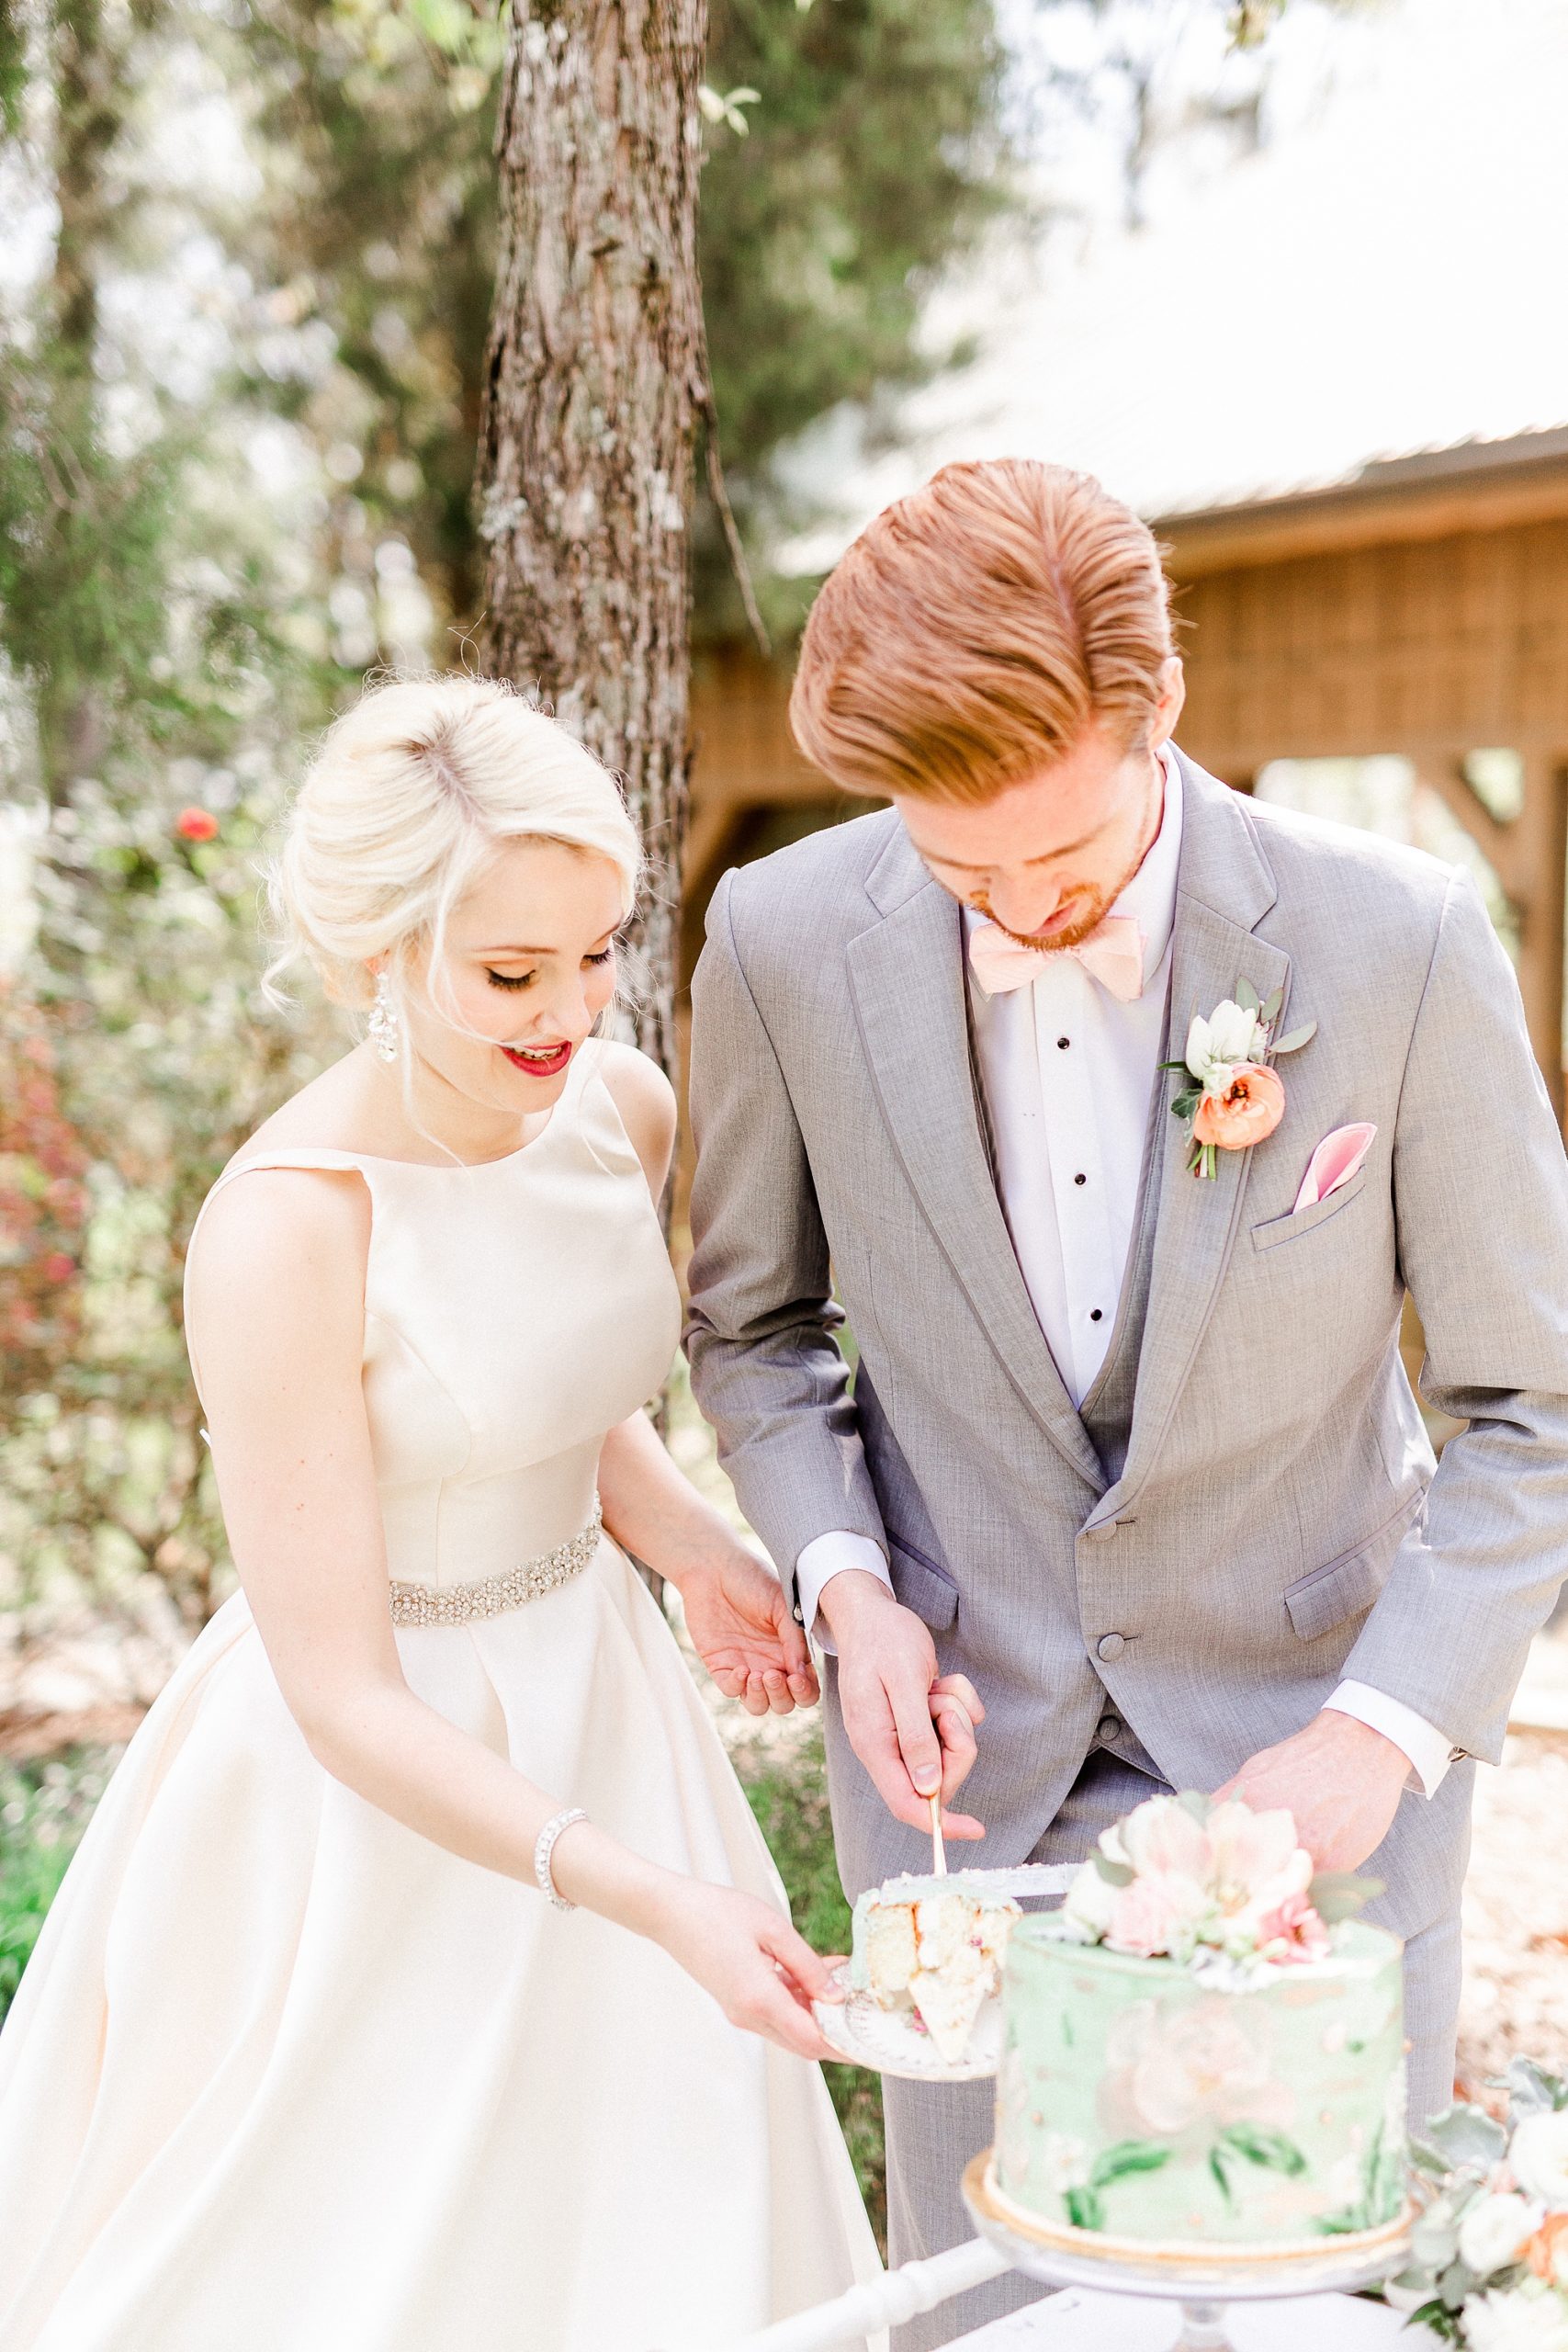 newlyweds cut wedding cake at Carolina Country Weddings